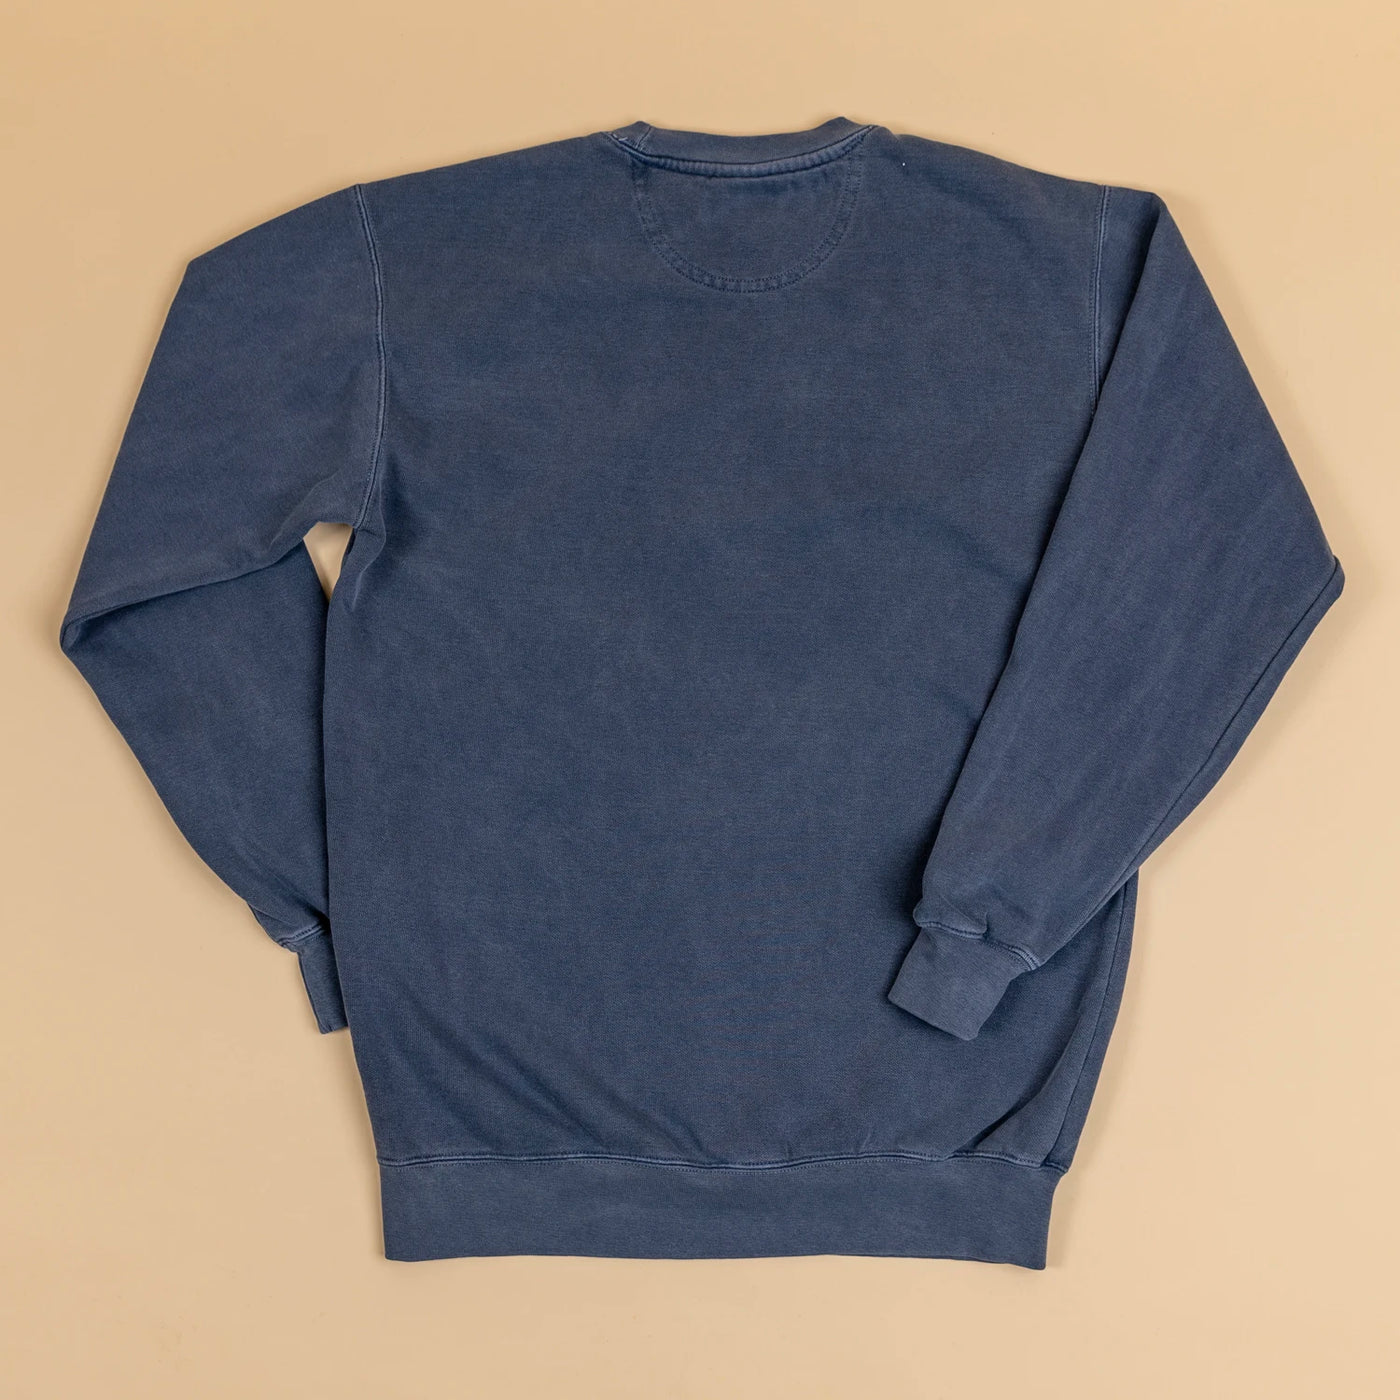 General Store Sweatshirt